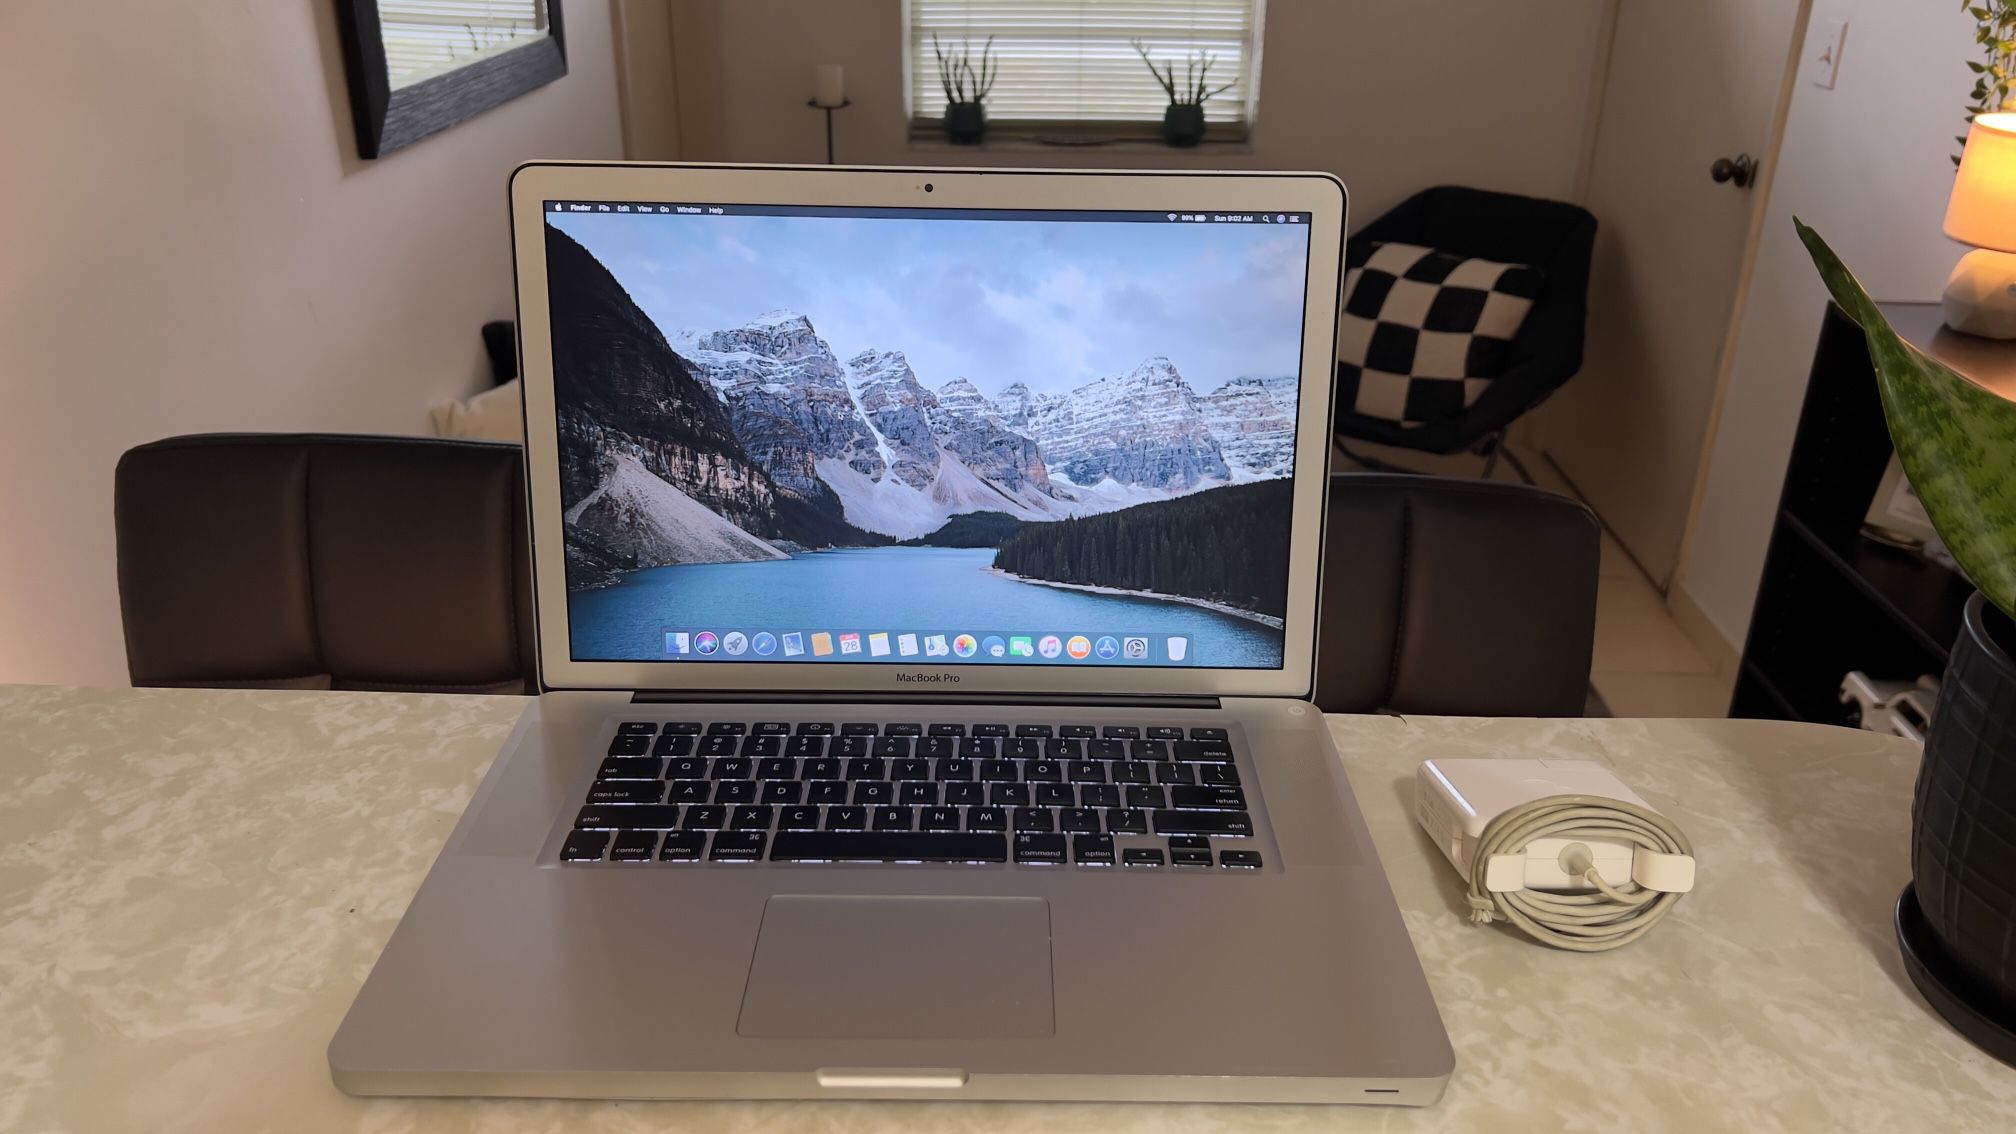 MacBook Pro 2010 15in Apple Laptop 